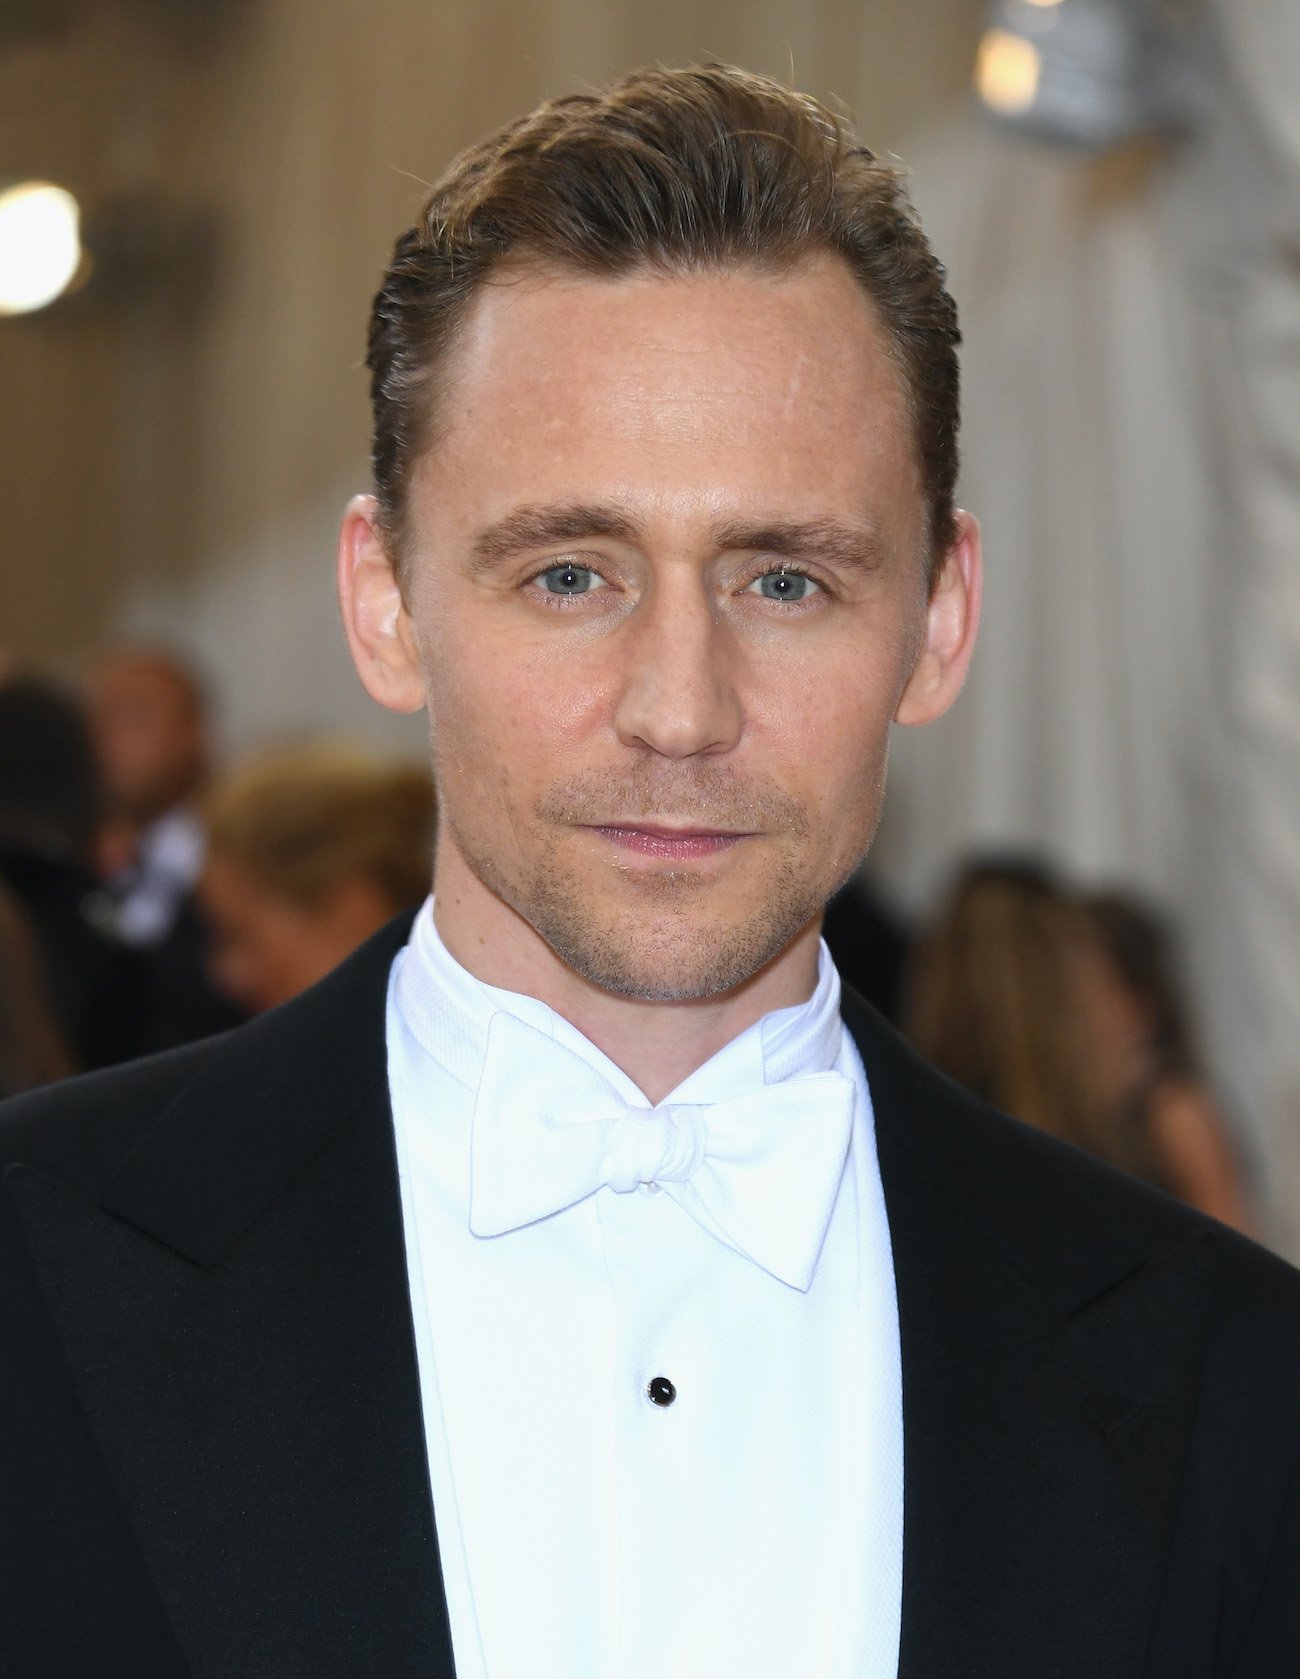 Tom Hiddleston profile in tuxedo